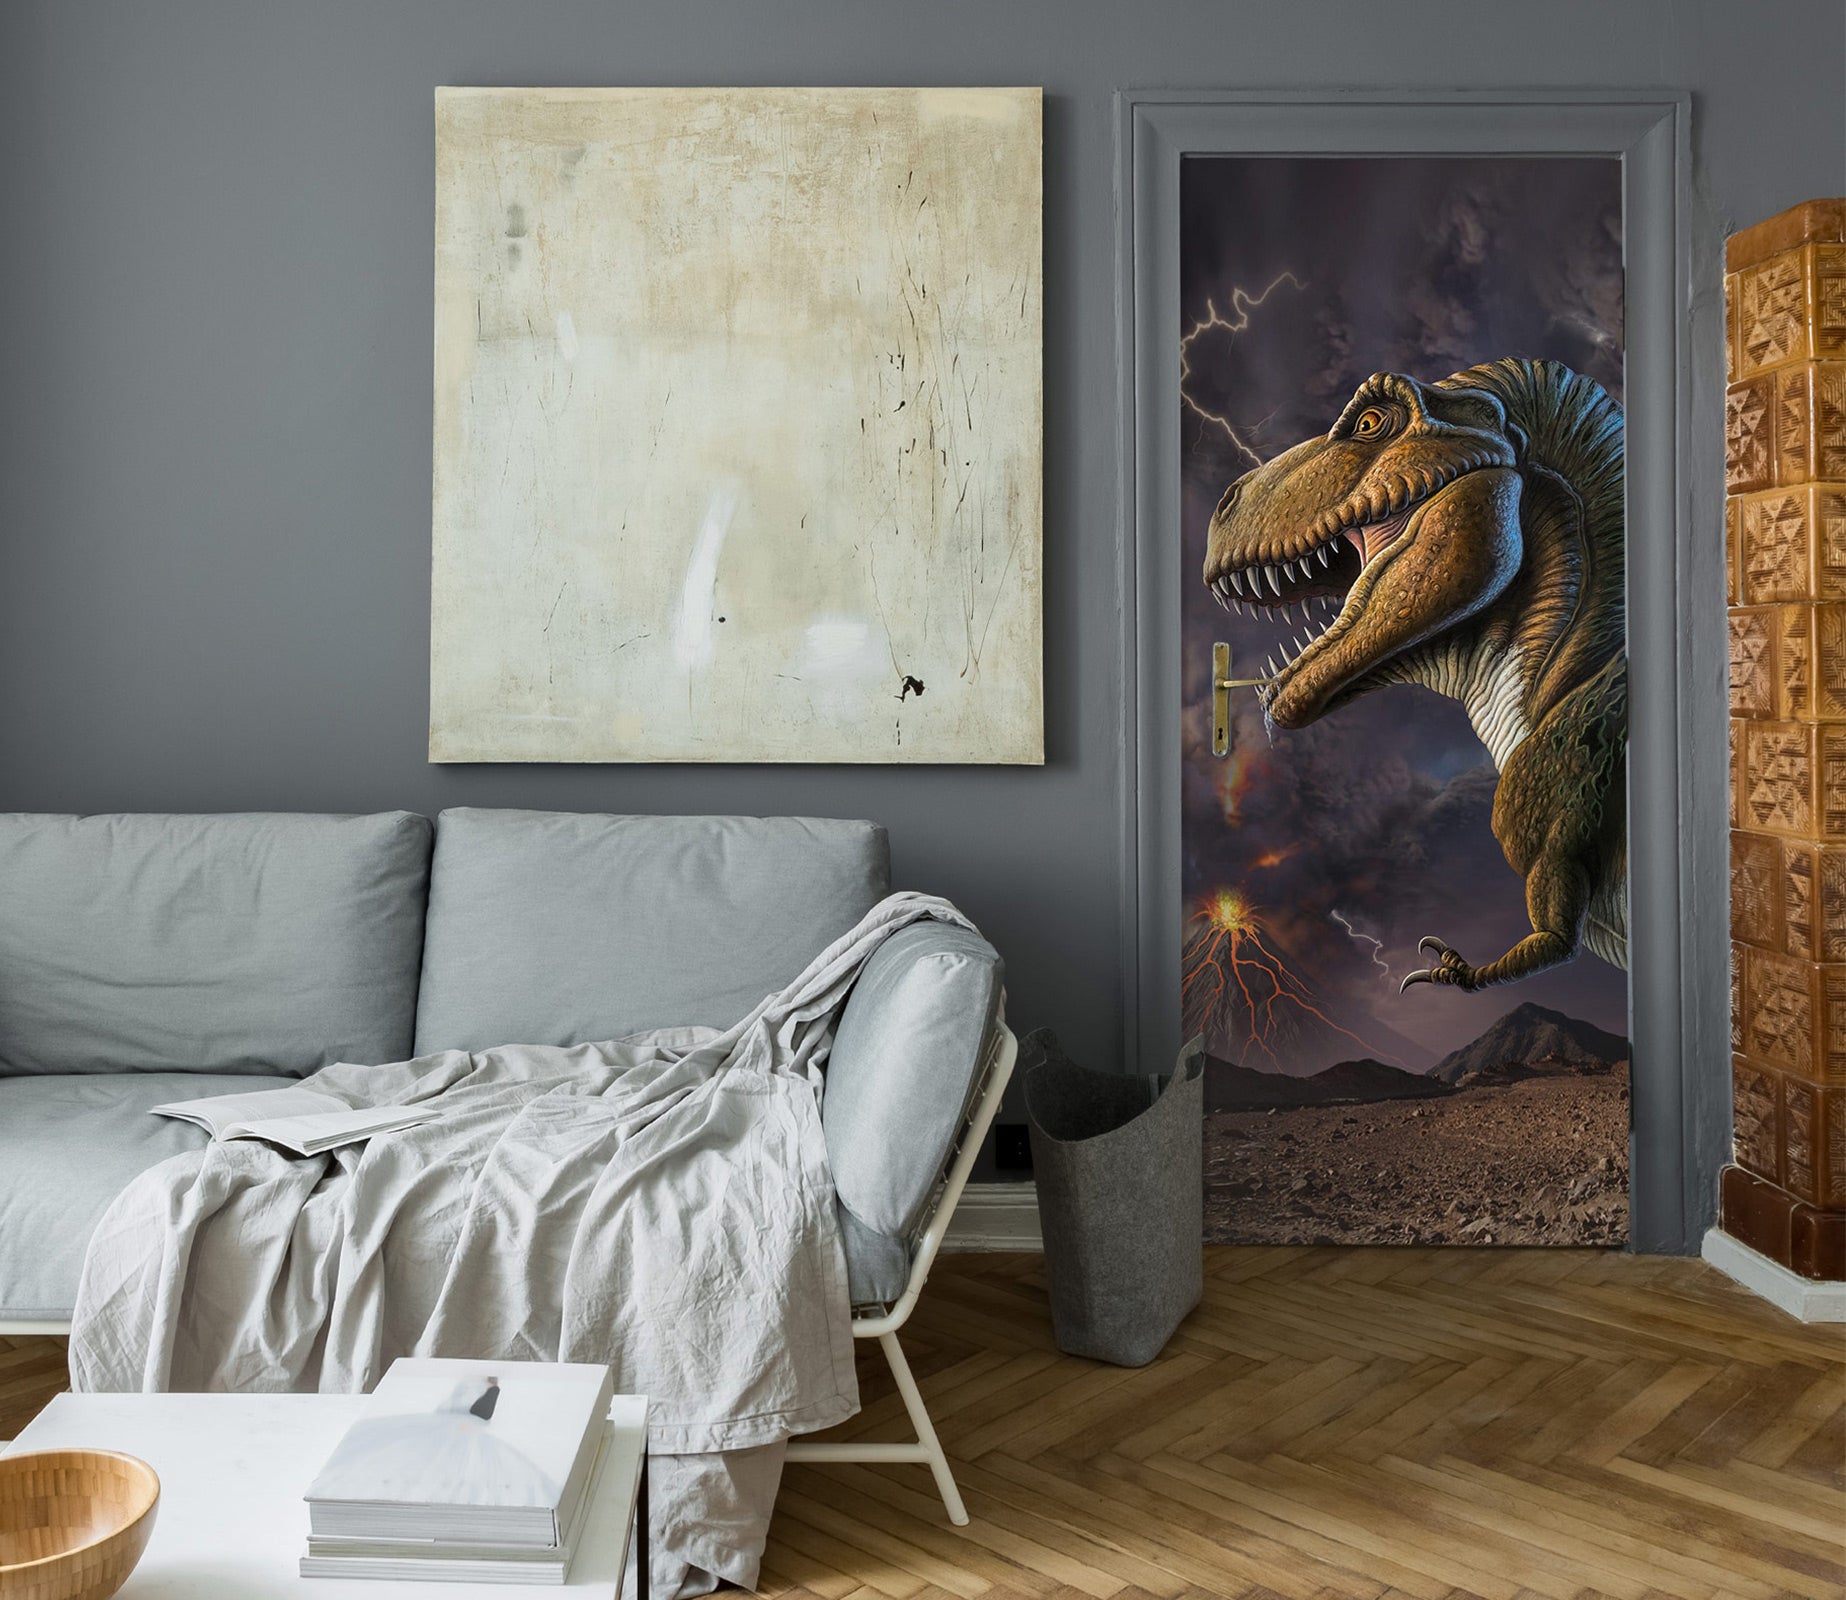 3D Dinosaur 112159 Jerry LoFaro Door Mural